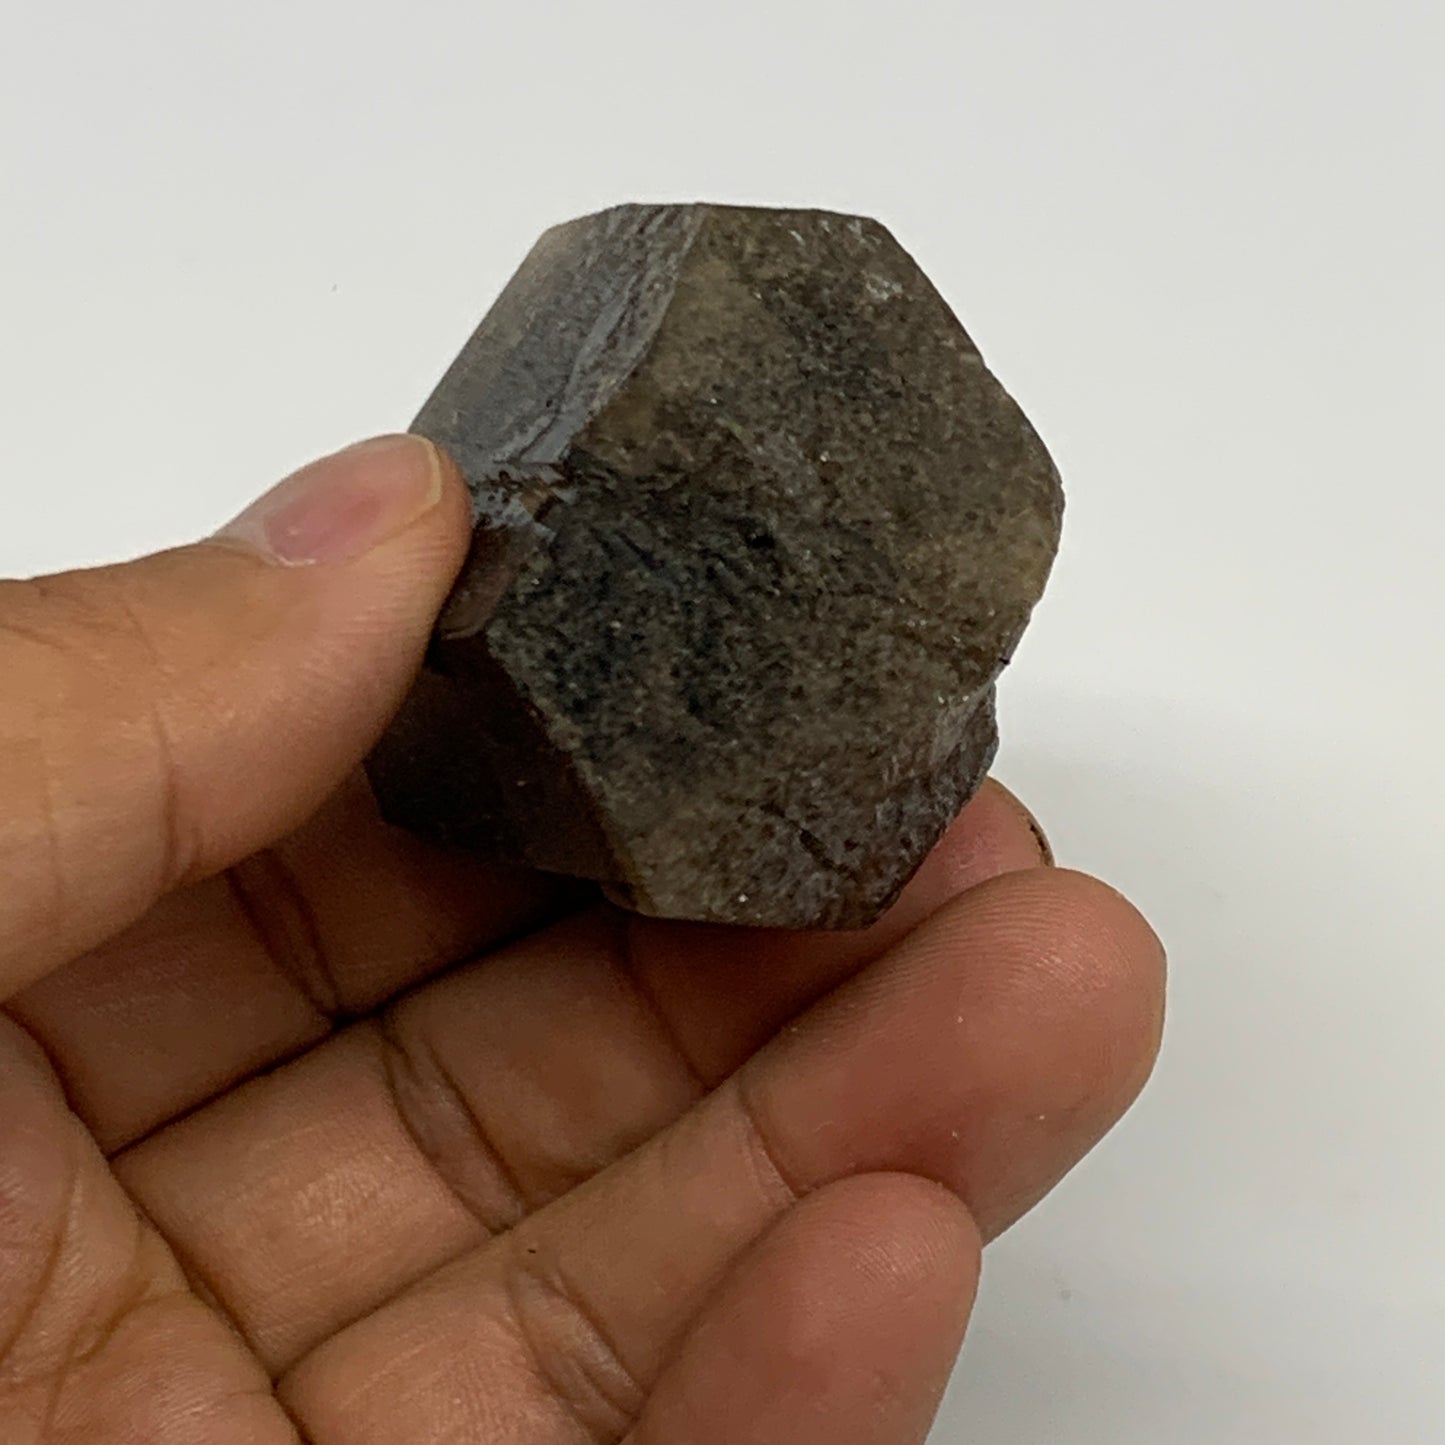 83.9g,2.4"x1.7"x1",Smoky Quartz Crystal Mineral,Specimen Terminated,B28965